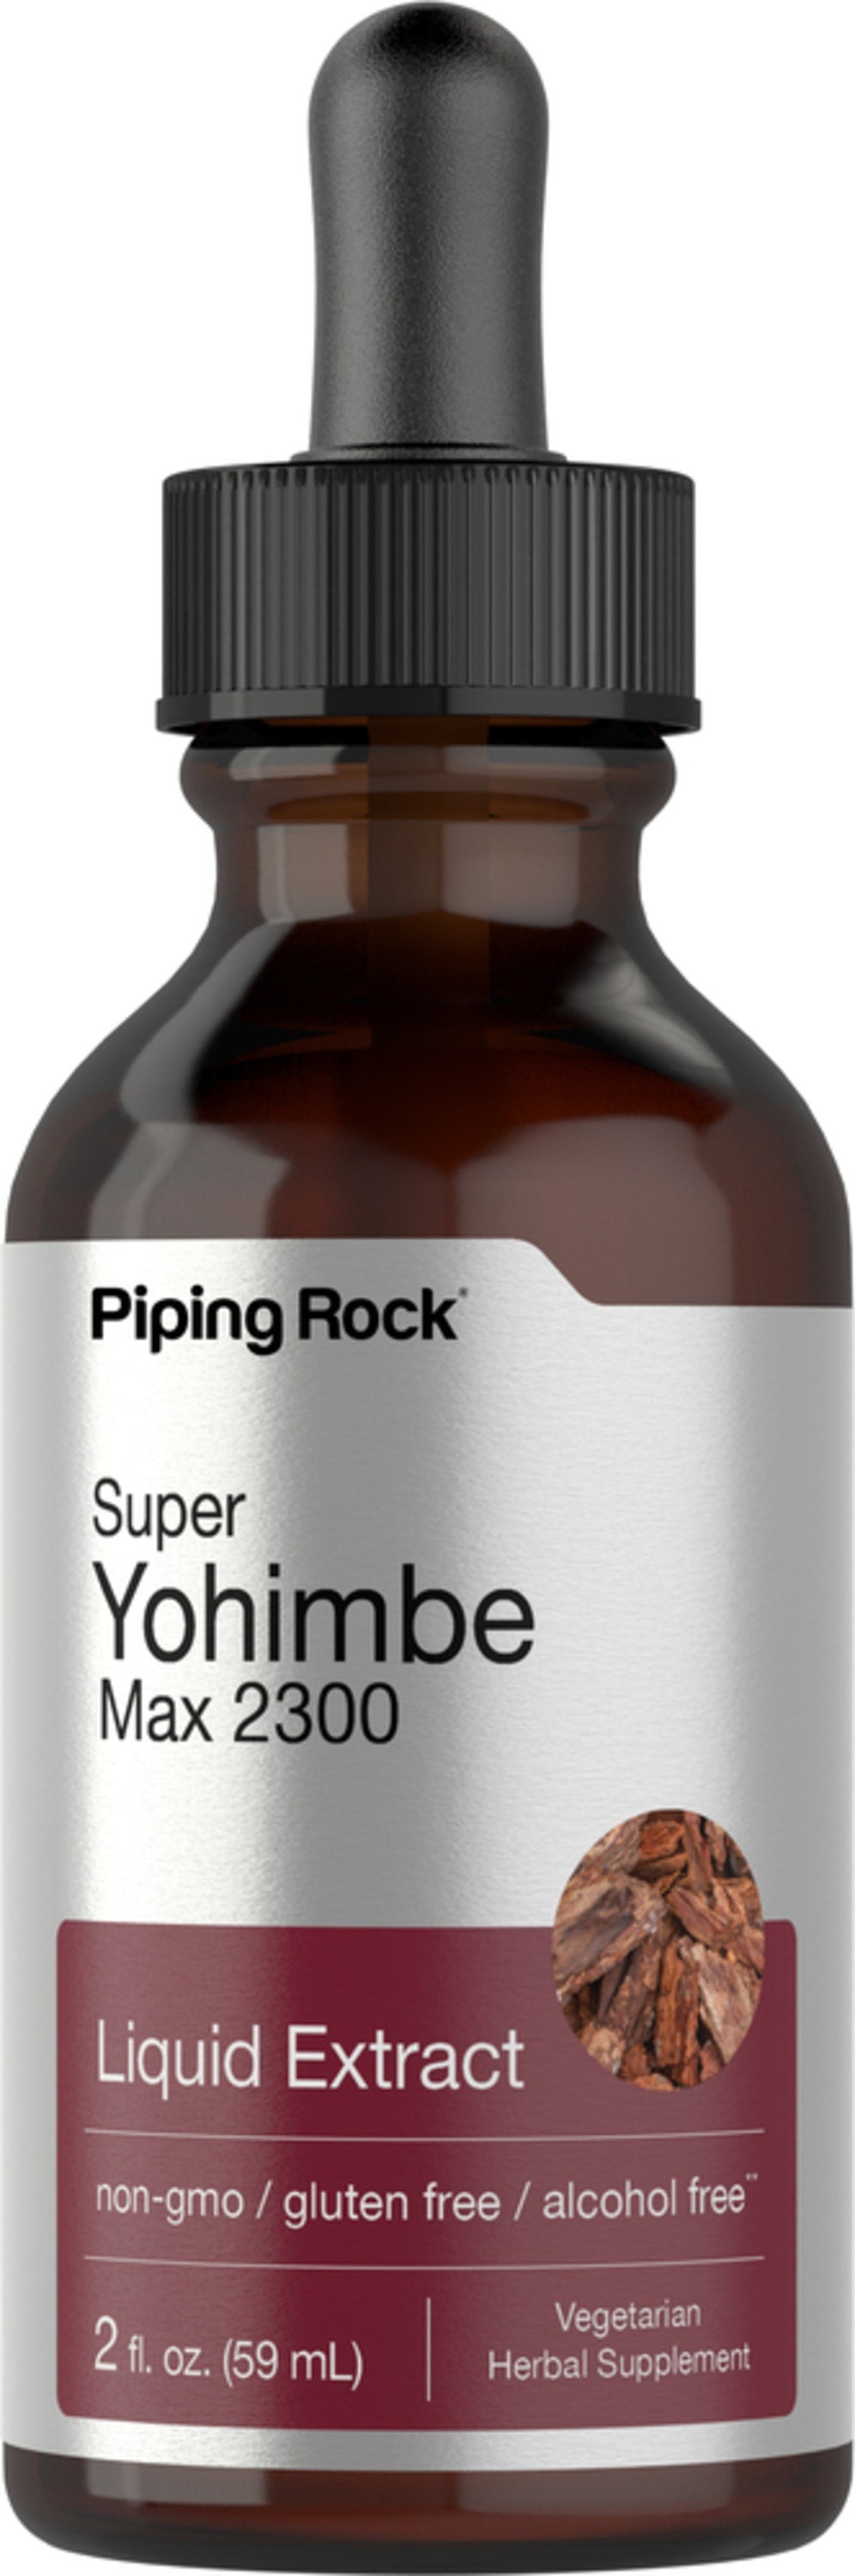 Super Yohimbe Max Liquid Extract Alcohol Free, 2300 mg, 2 fl oz (59 mL) Dropper Bottle